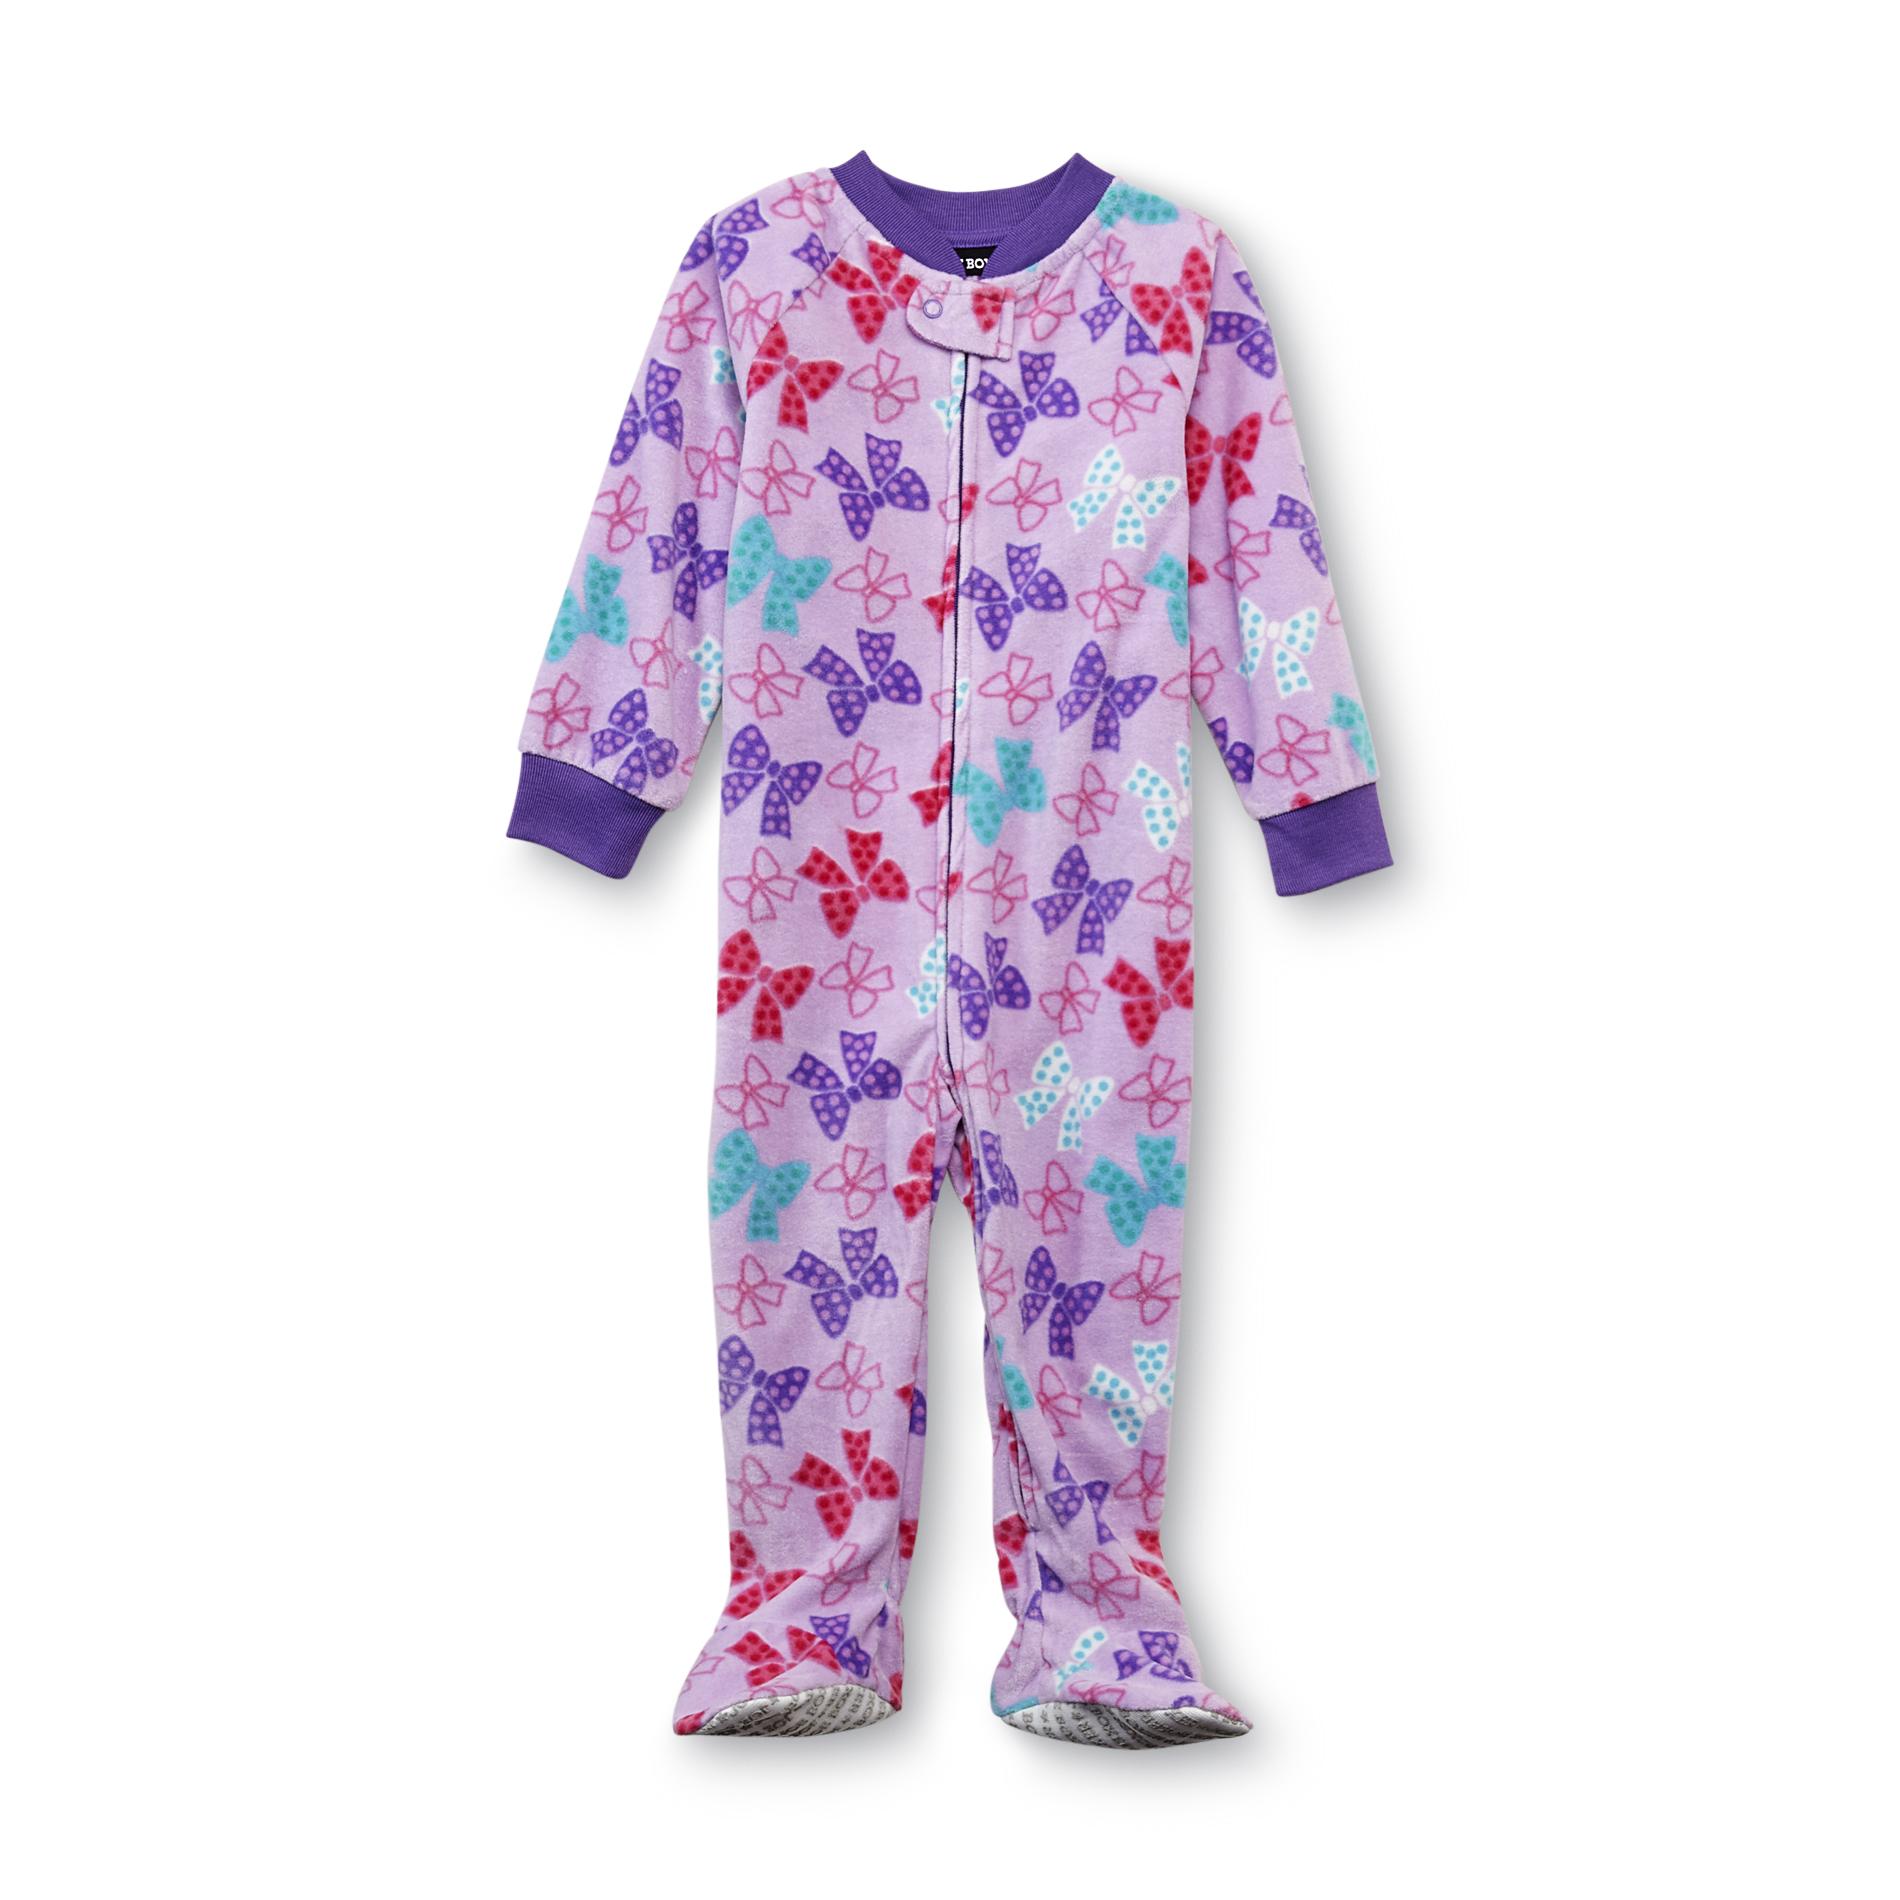 Joe Boxer Infant & Toddler Girl's Footed Blanket Sleeper Pajamas - Bows